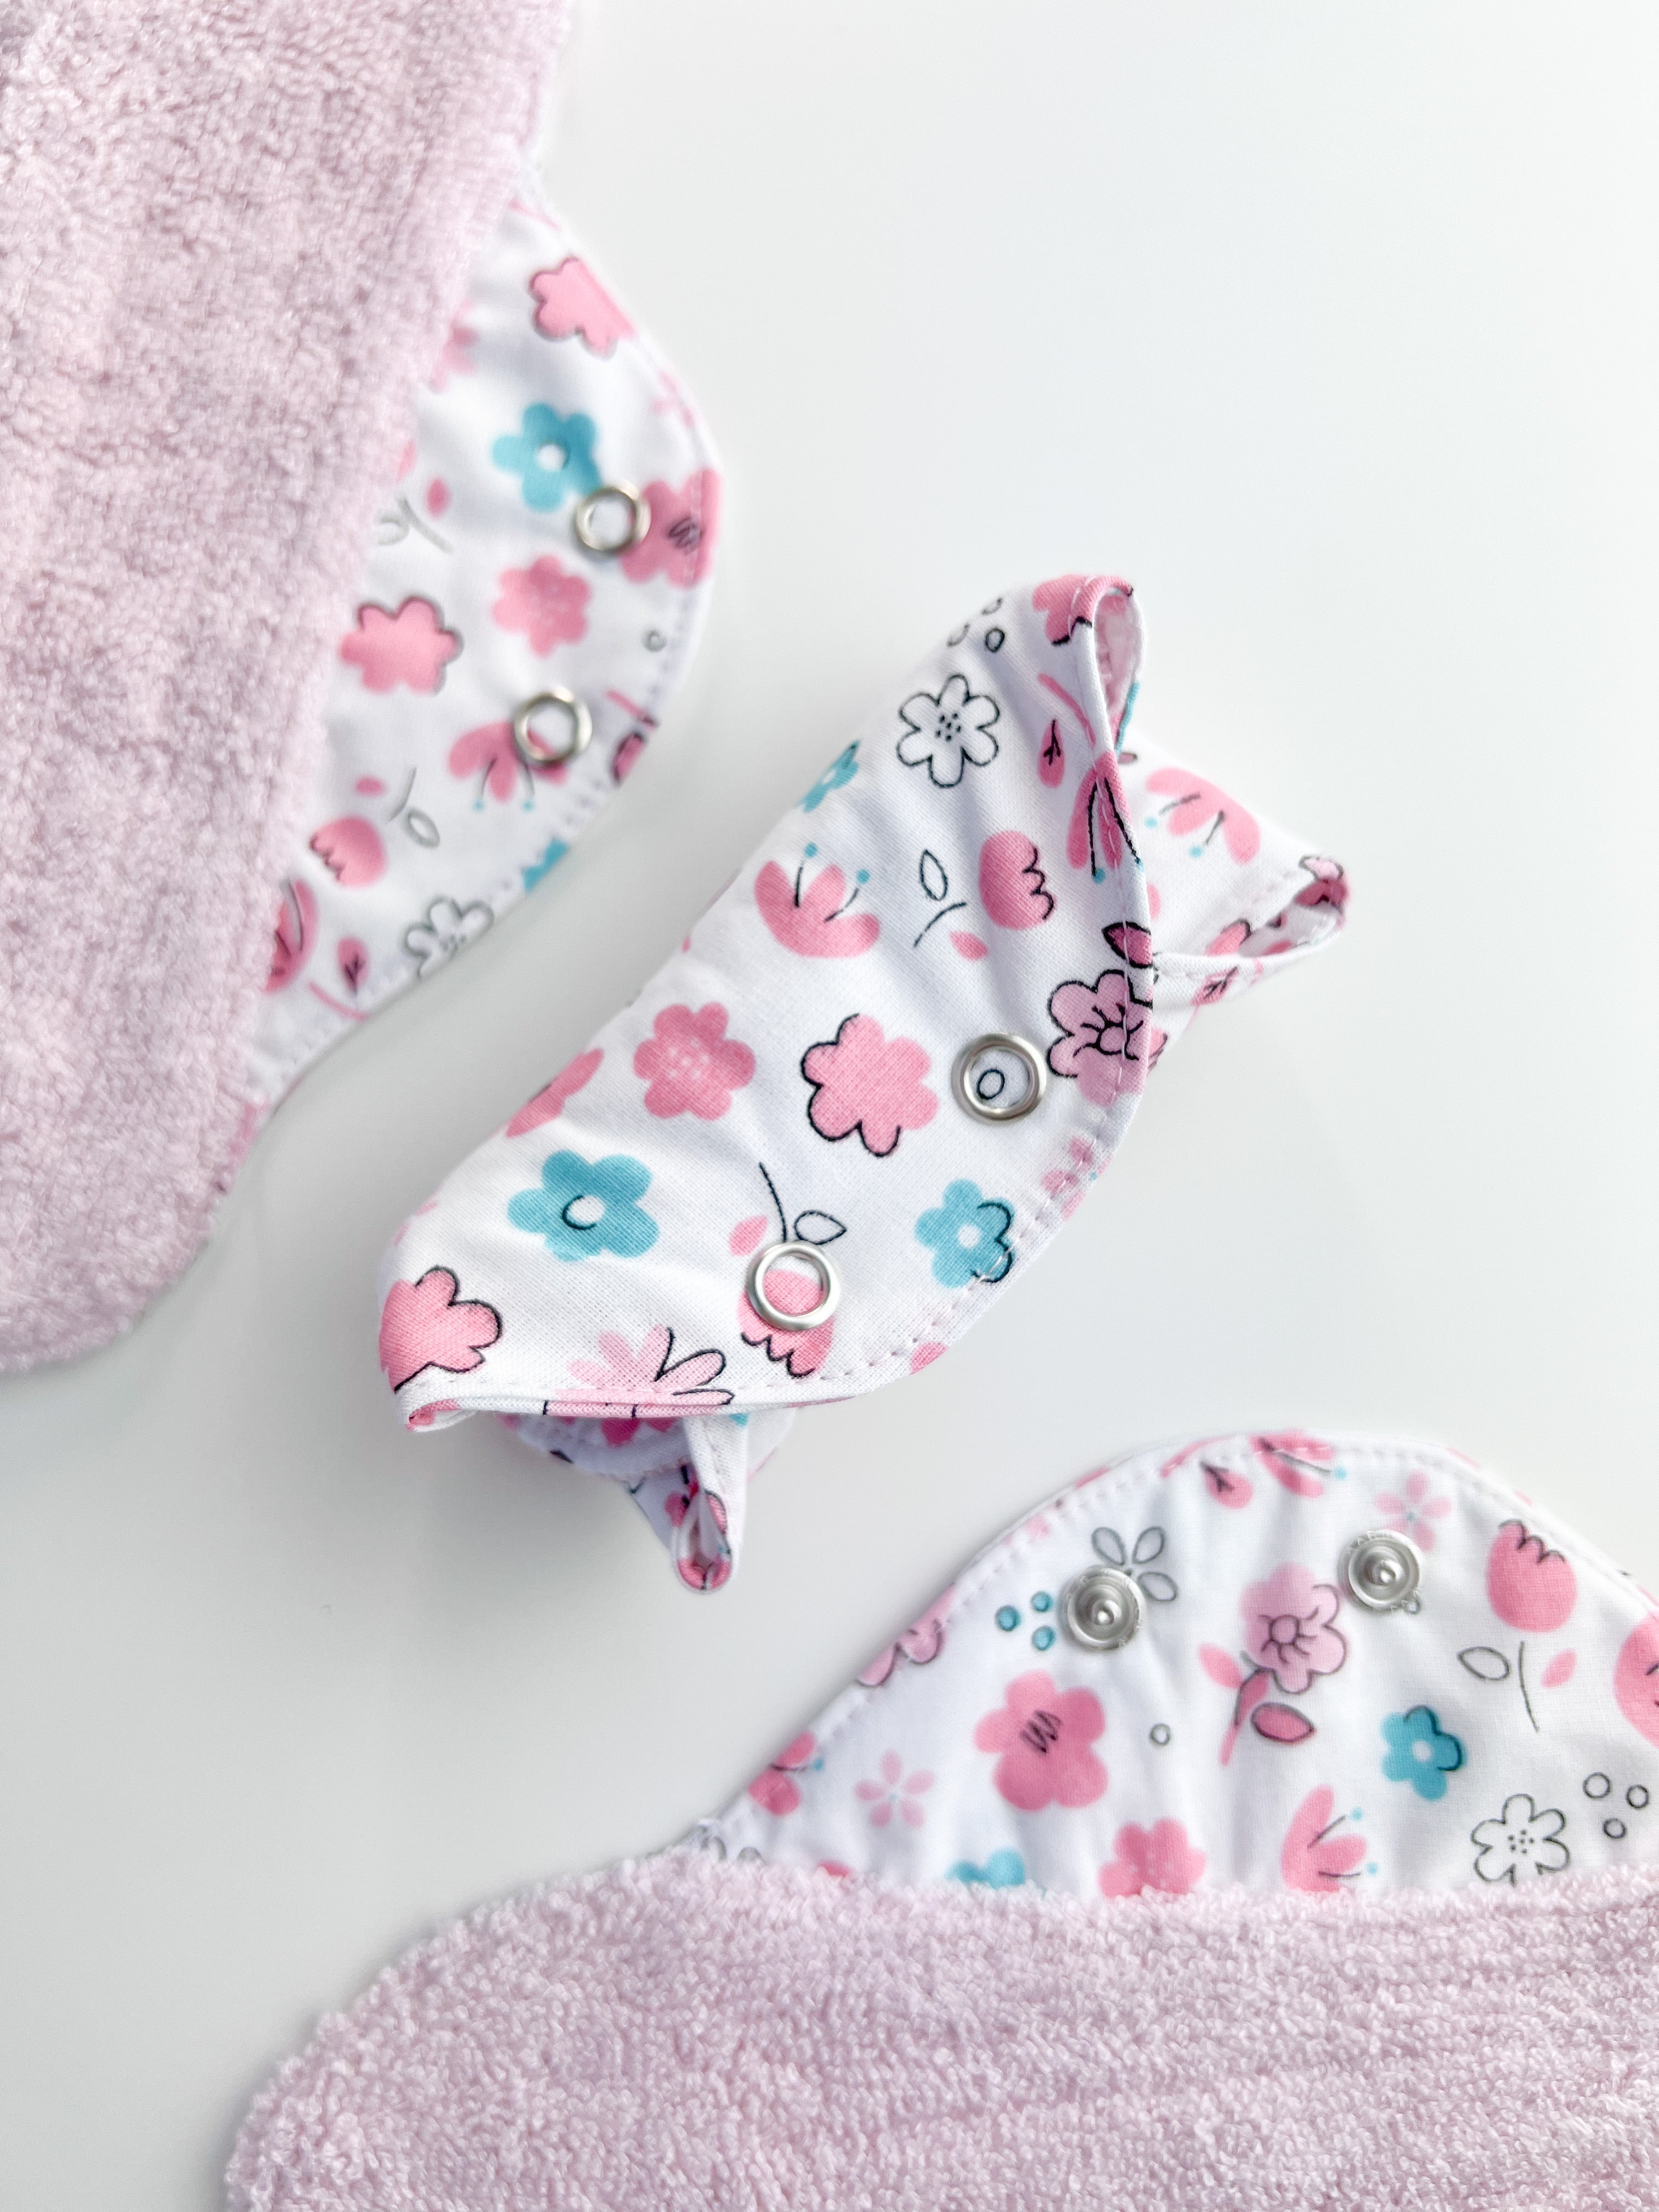 Menstrual cloth pads - Light pink